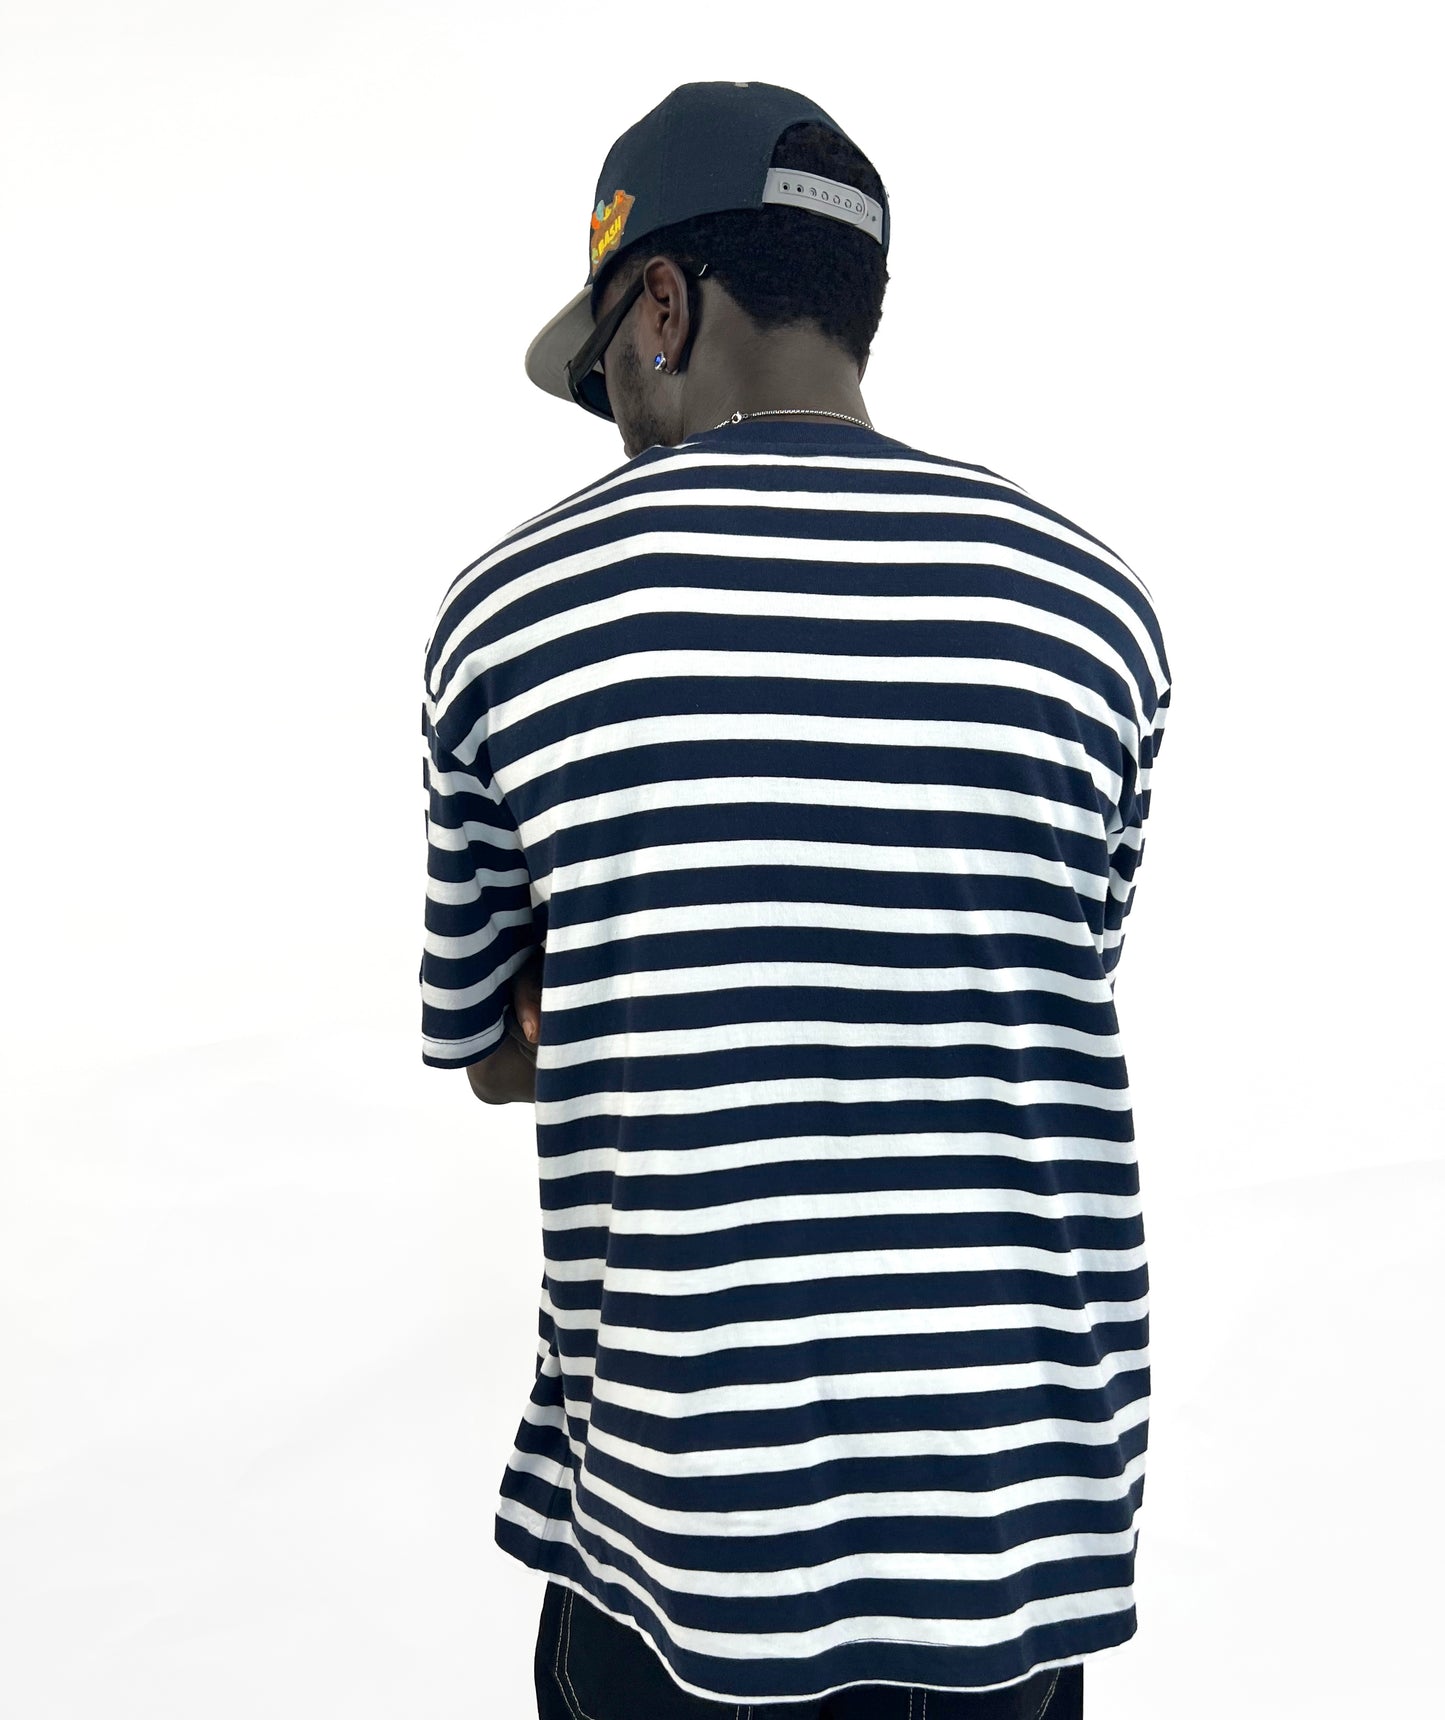 Garag3 Striped T-shirt in navy/white